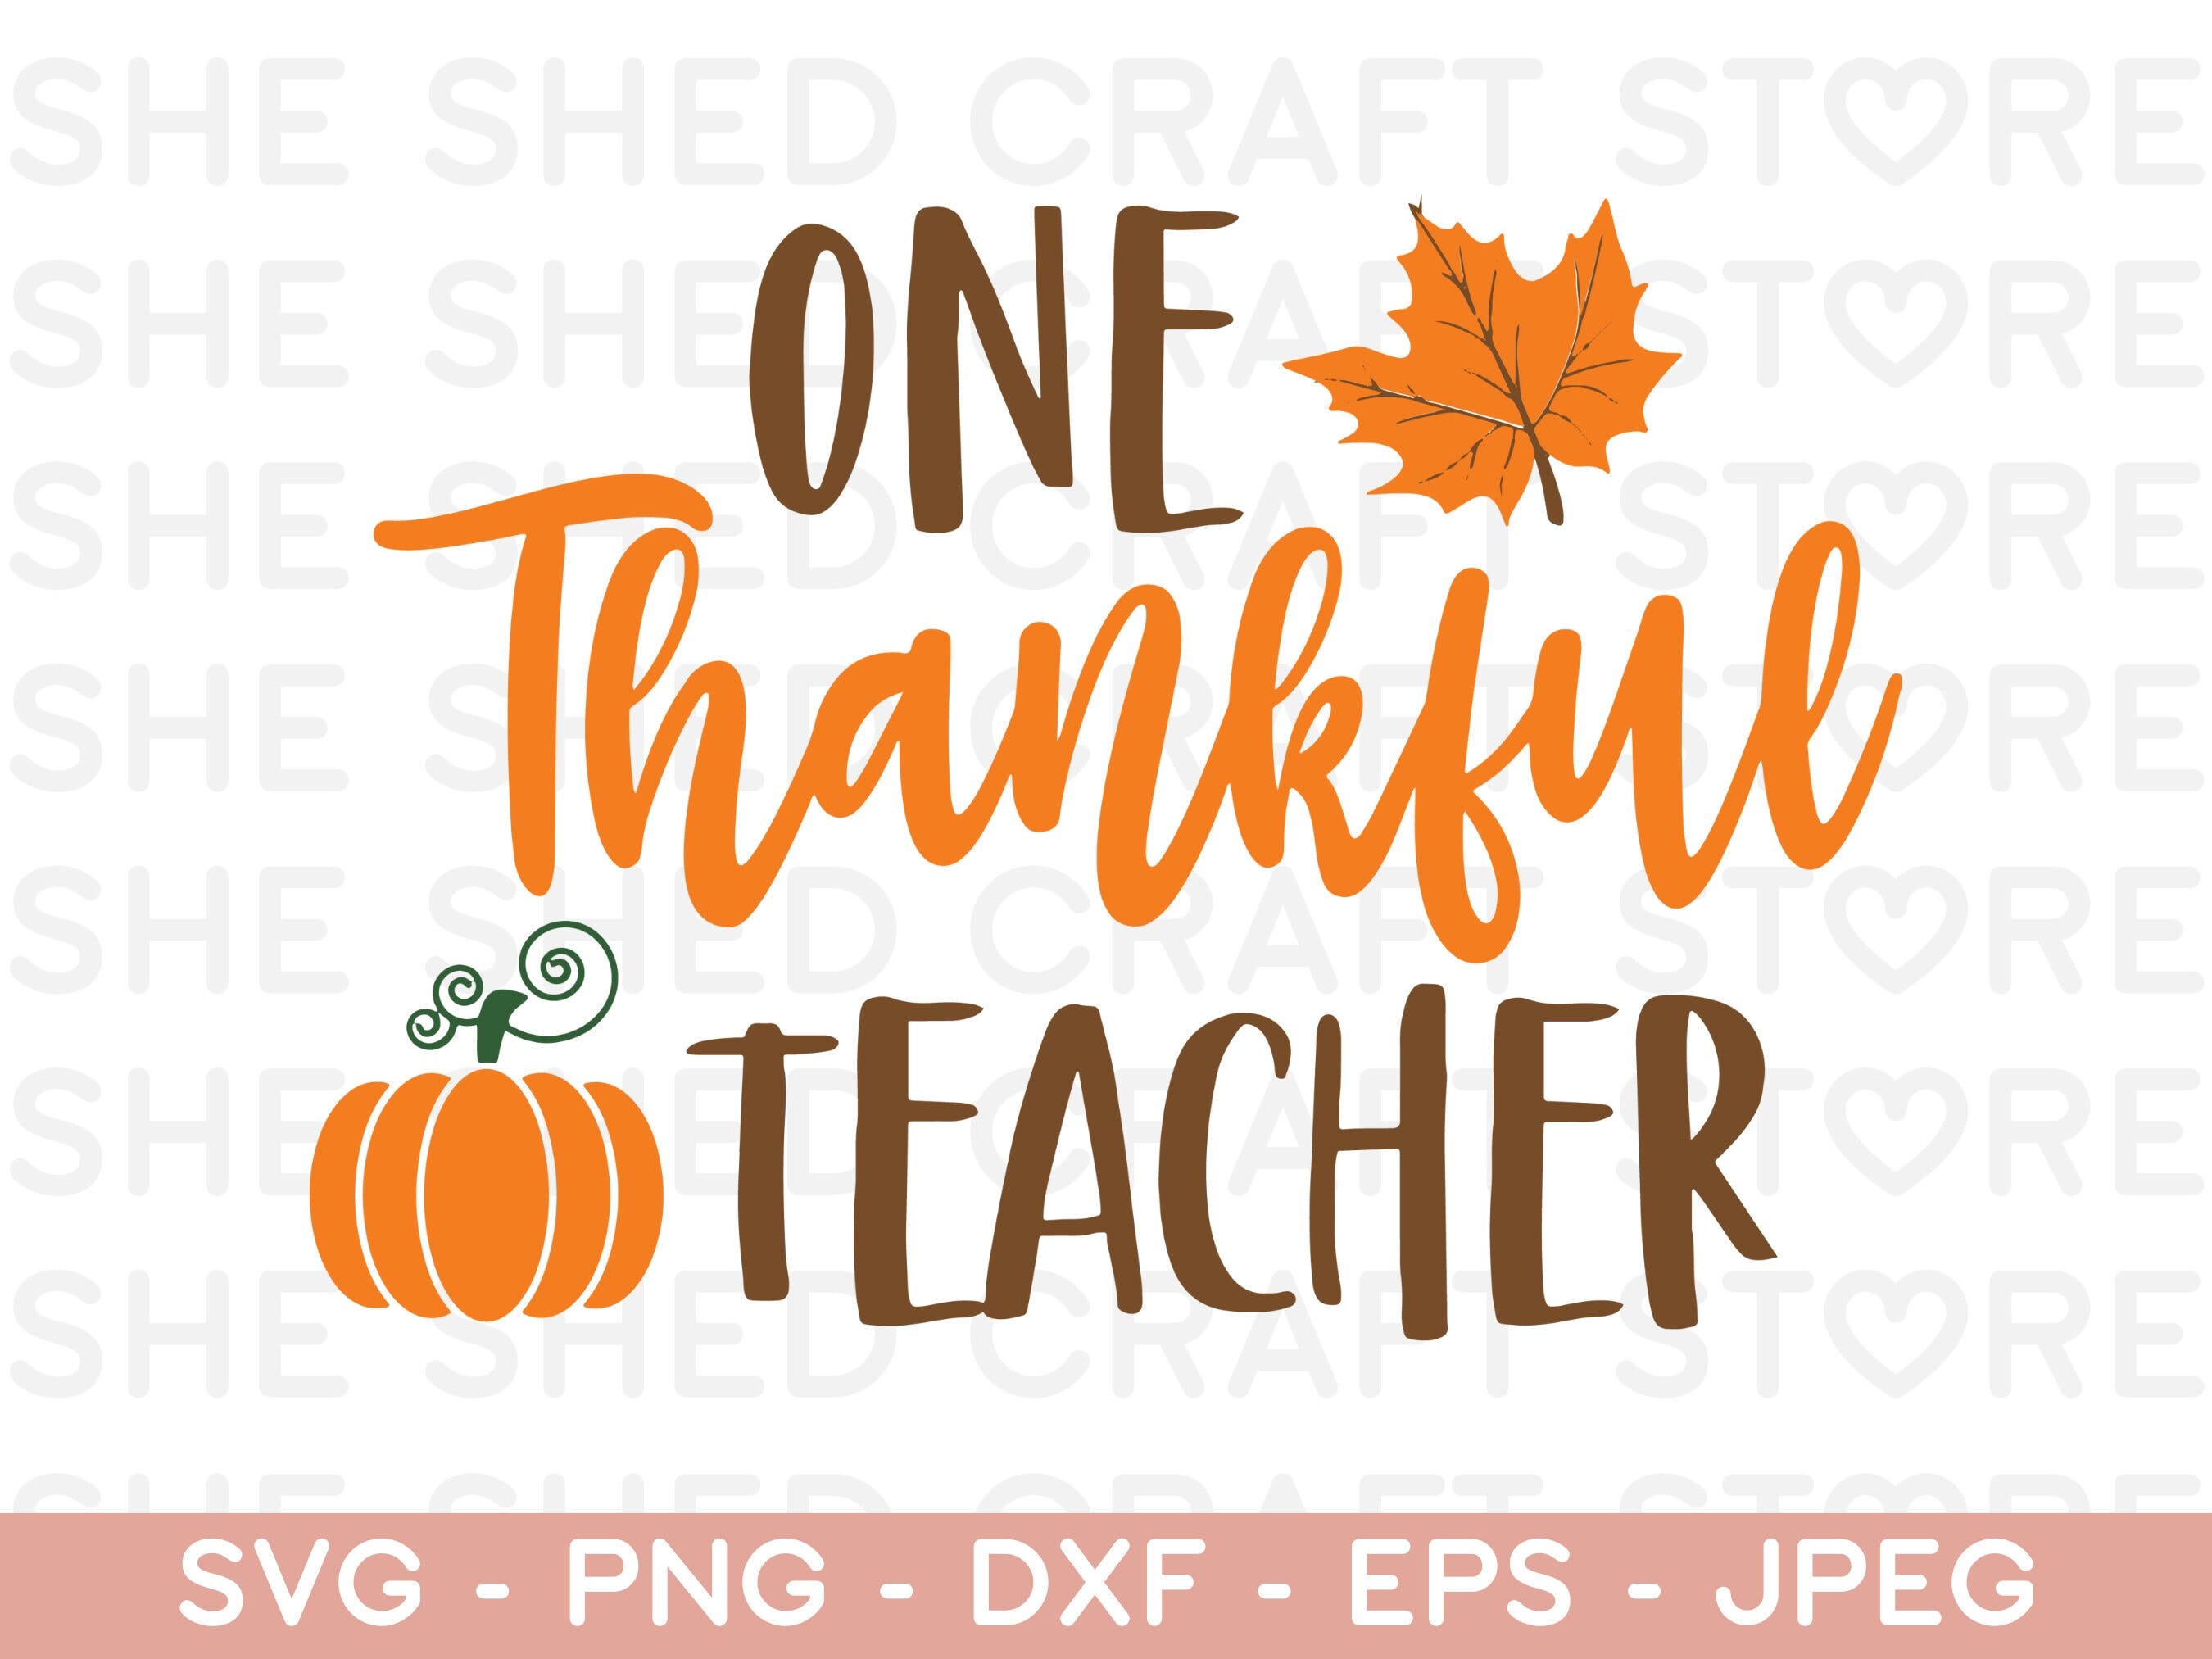 One Thankful Teacher SVG, Educator Svg, Teacher Svg files, It